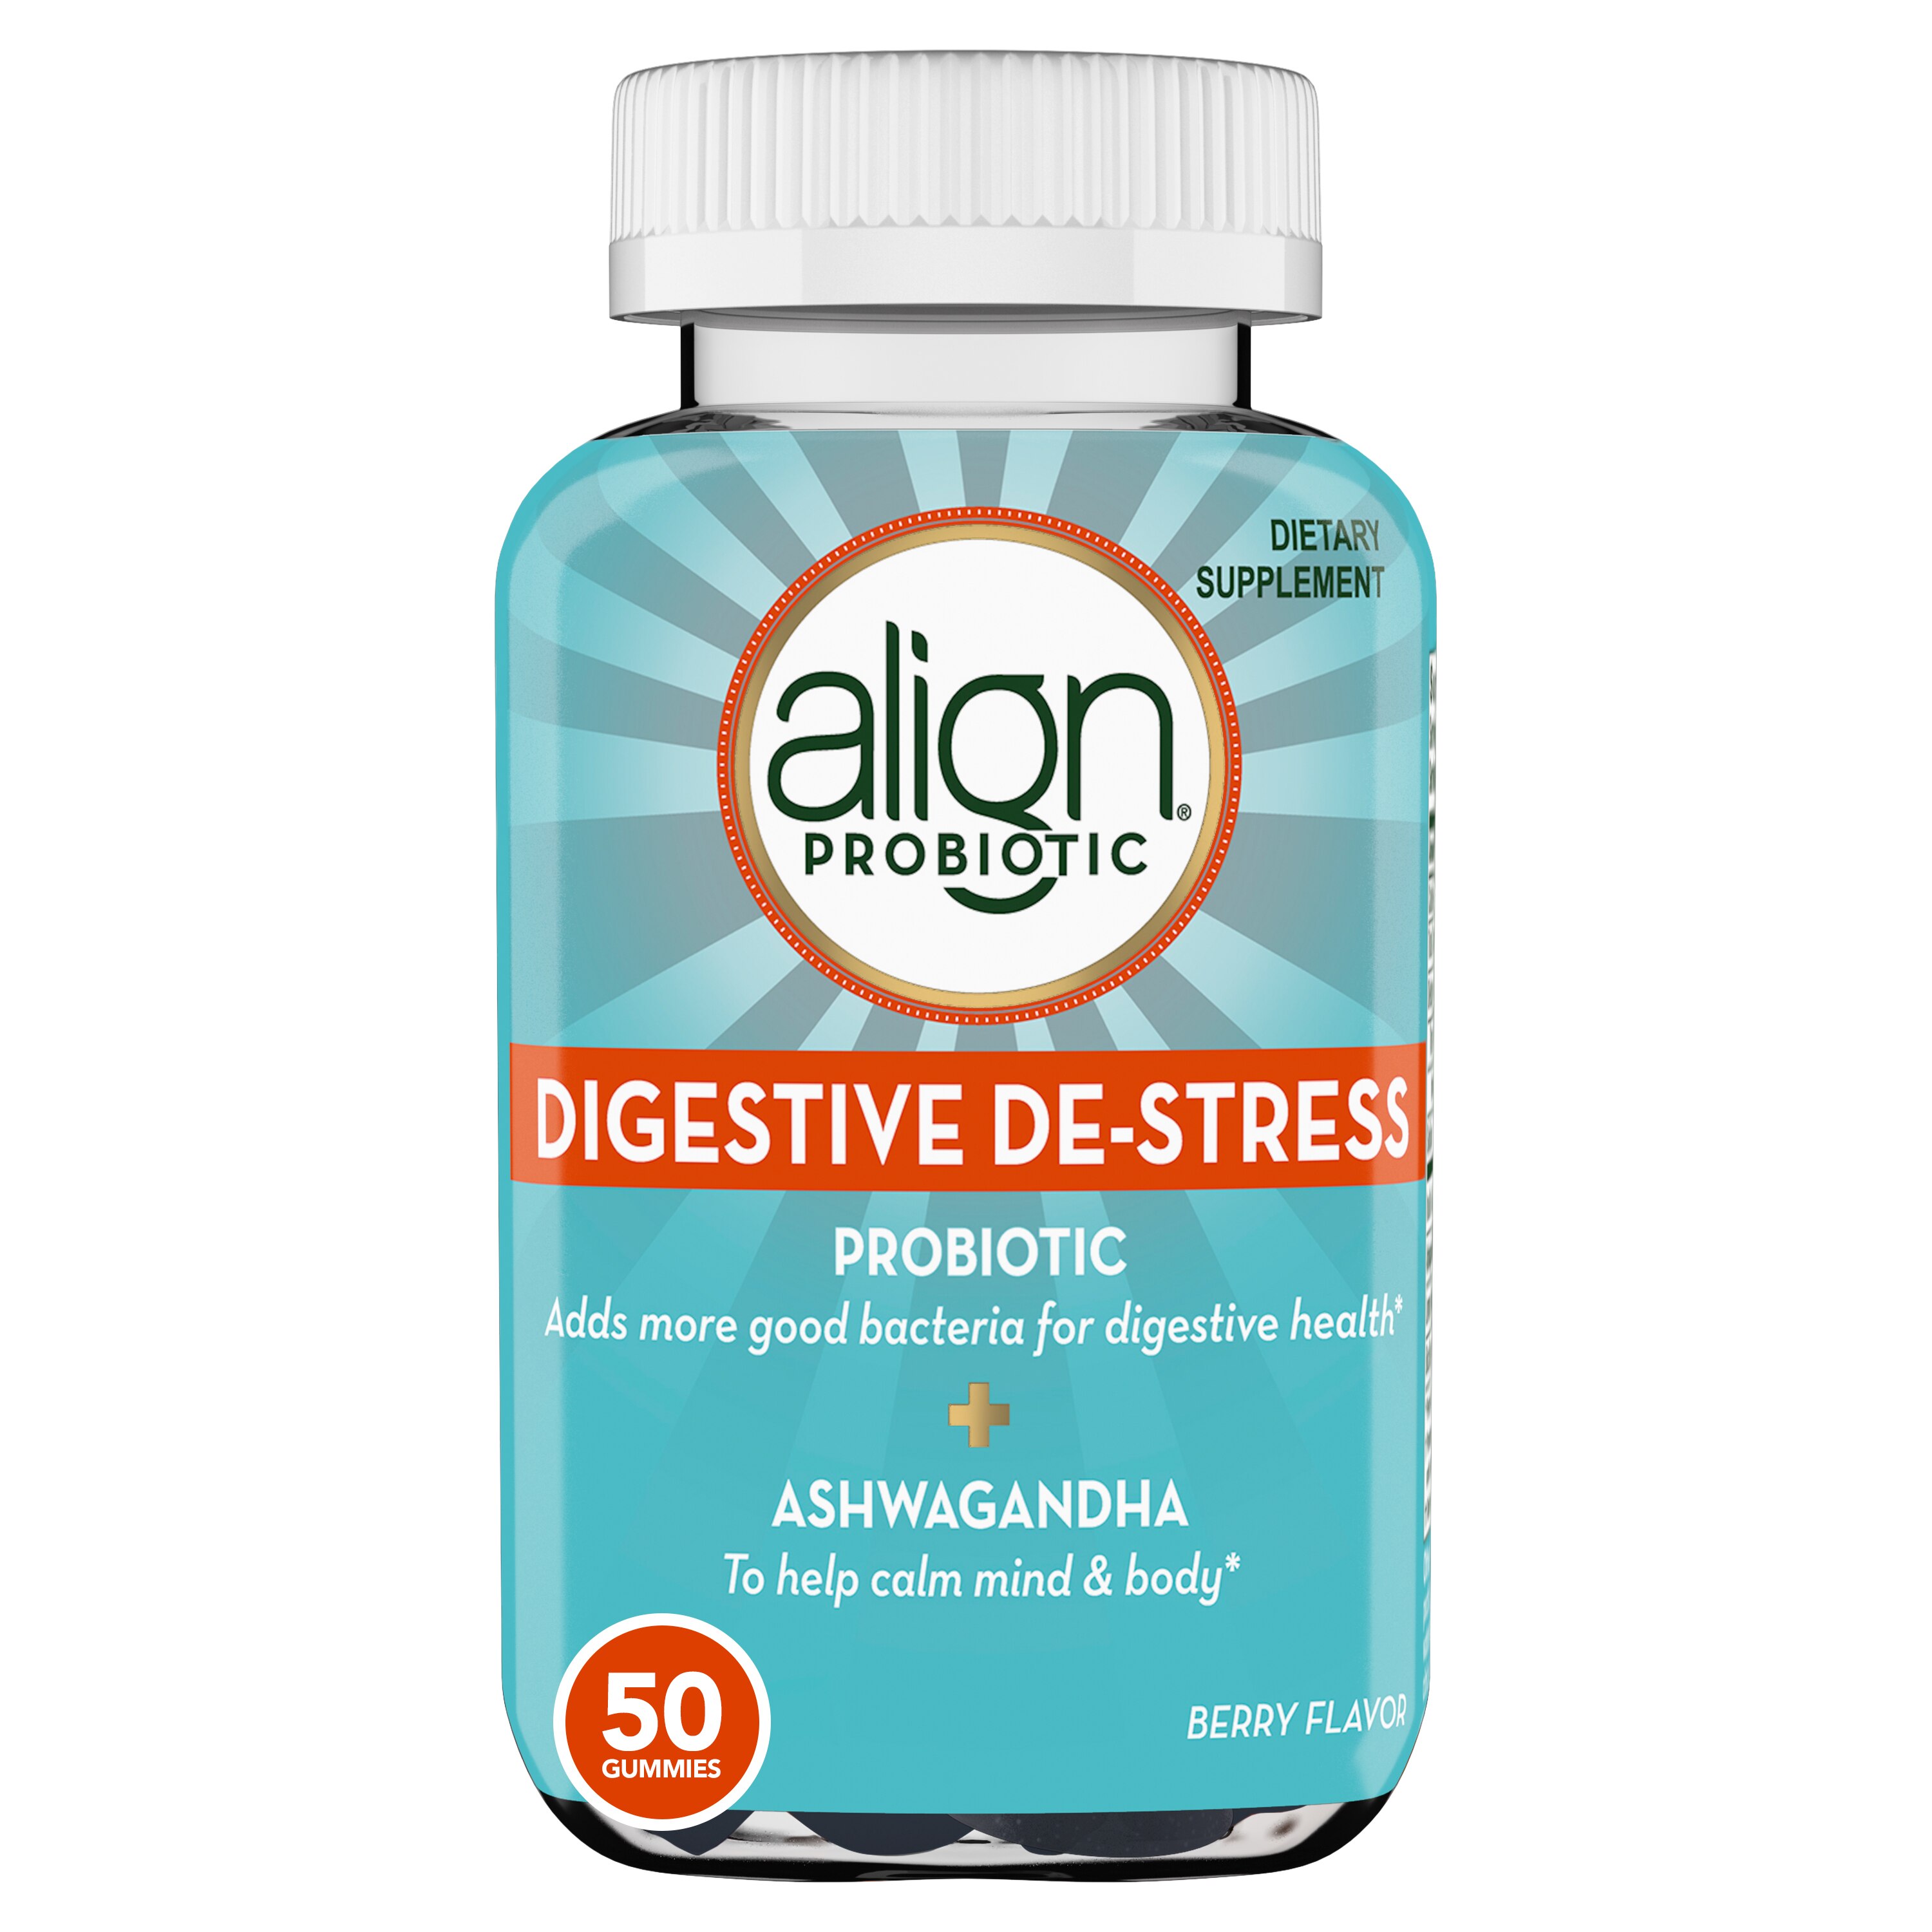 Align DIGESTIVE DE-STRESS Probiotic + Herbal Ashwagandha Supplement, Digestive Health for Men & Women, Berry Flavor, 50 Gummies, #1 Doctor Recommend